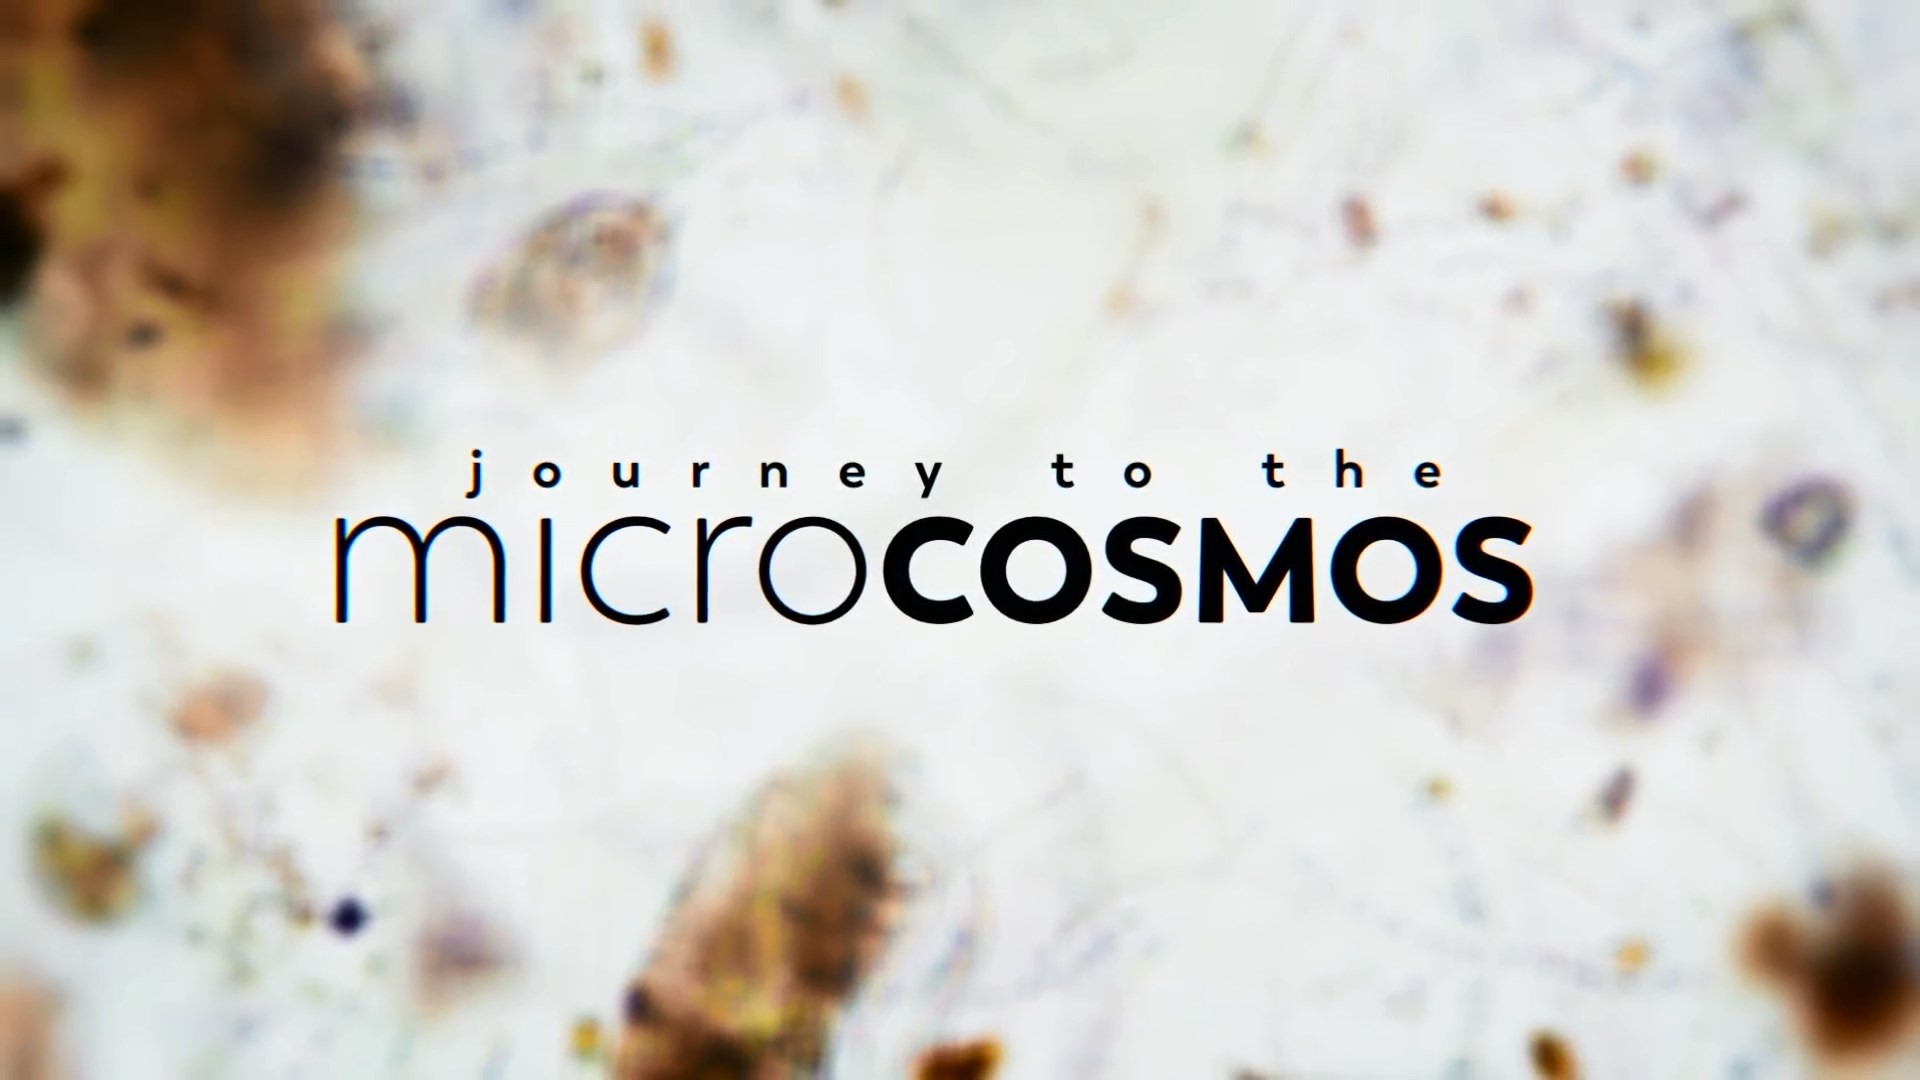 journey to microcosmos